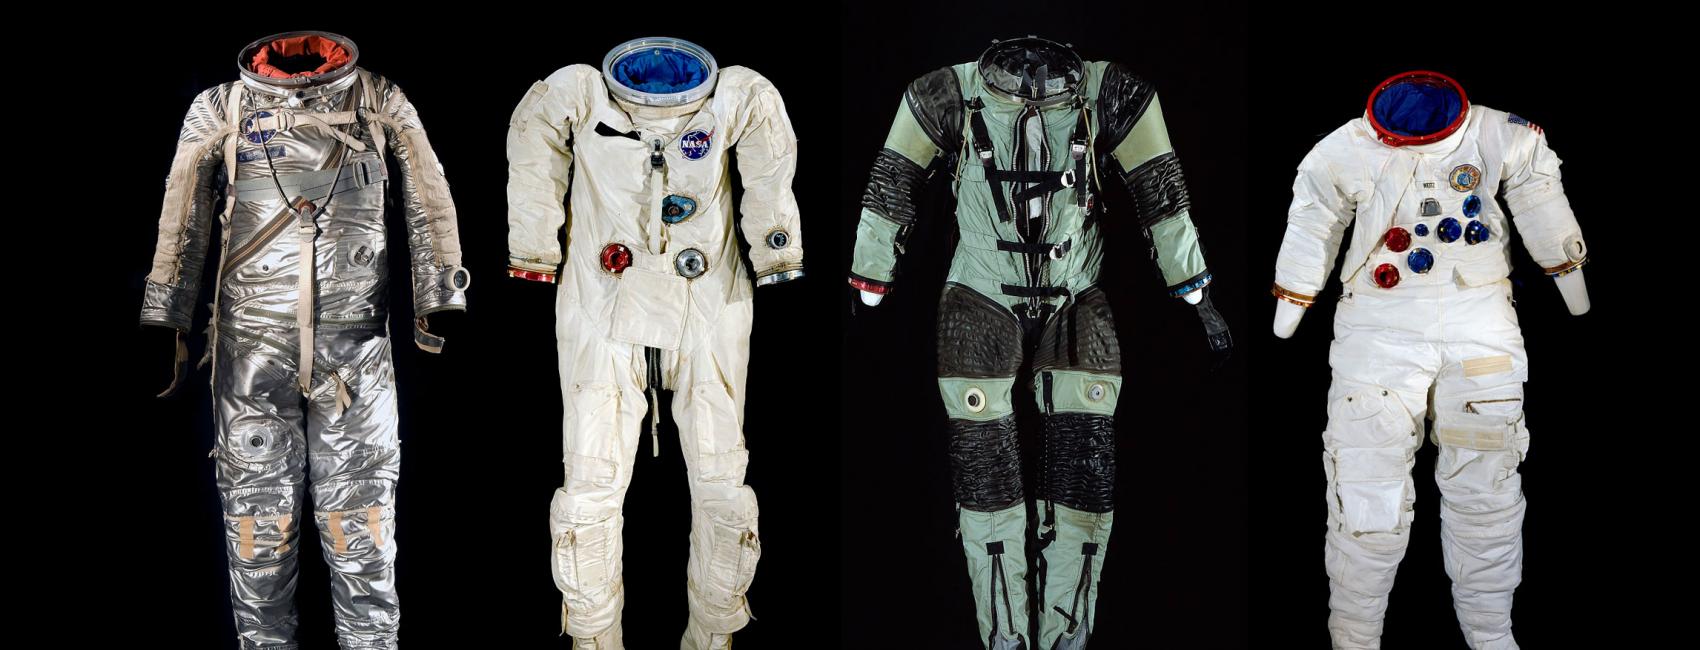 Nasa Astronaut Suit